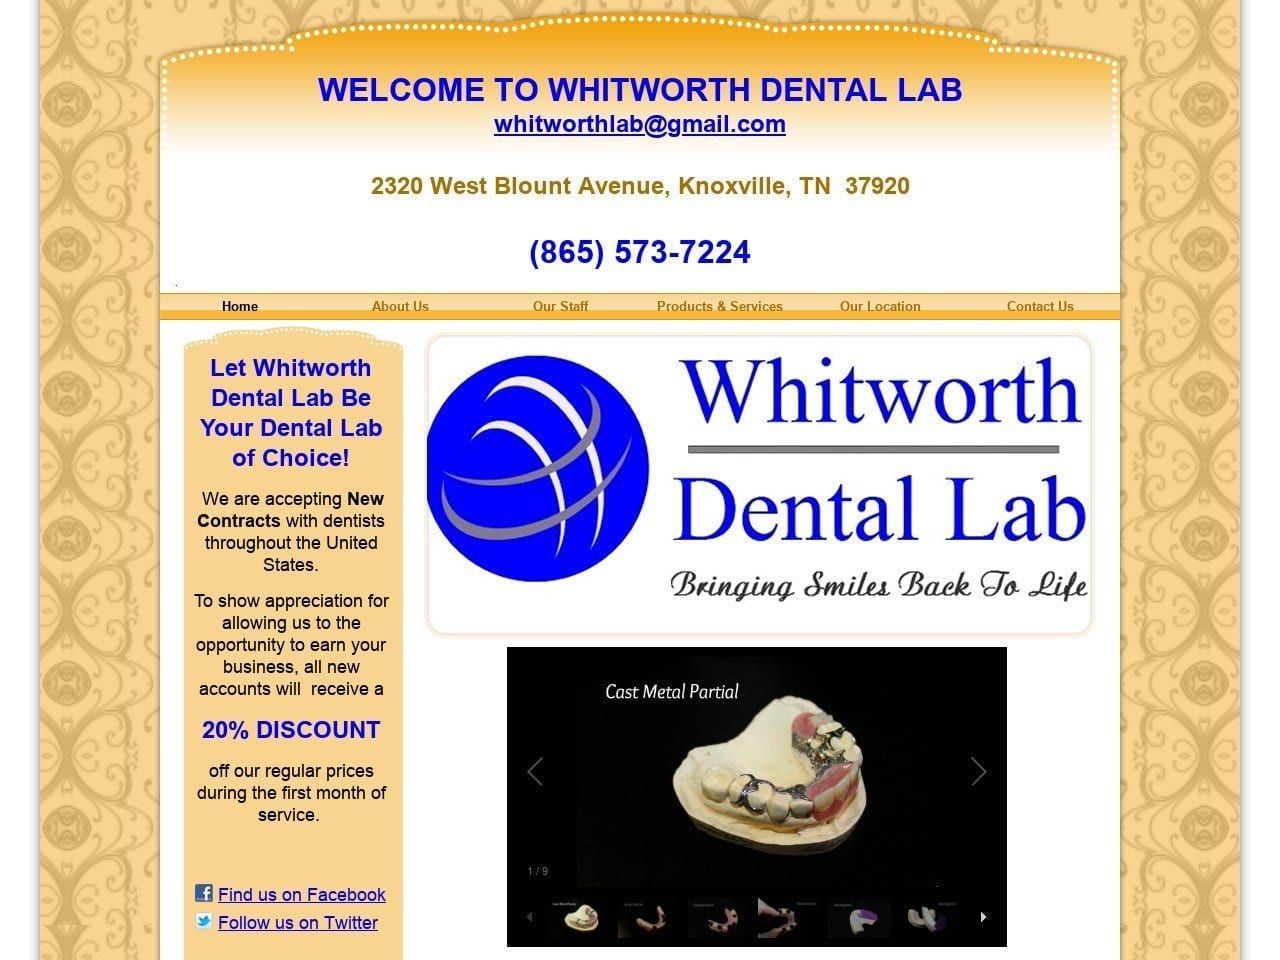 Whitworth Dental Lab Website Screenshot from whitworthdentallab.com